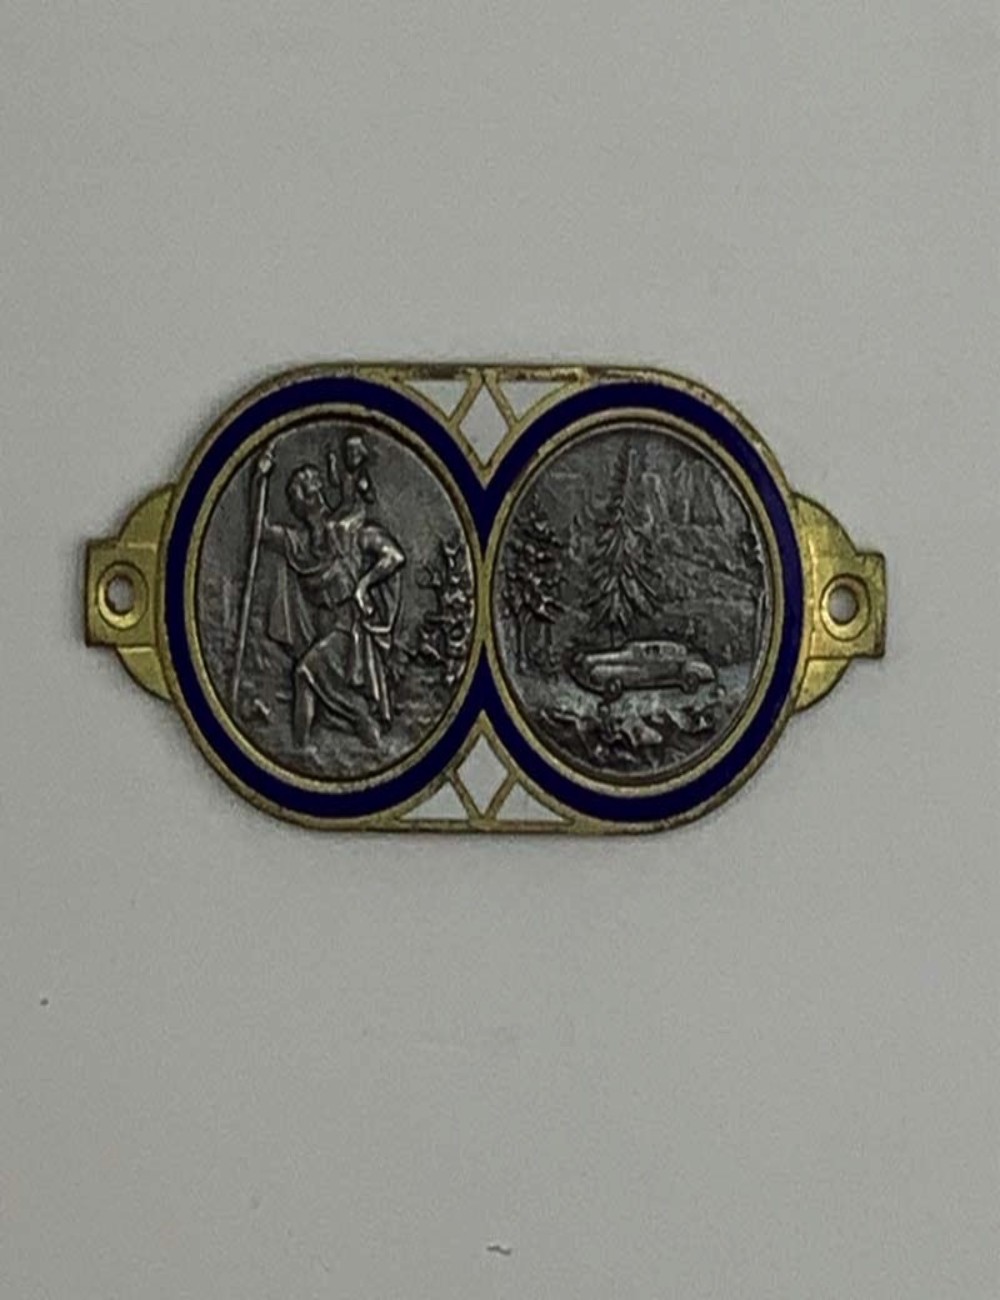 San Cristoforo plaque. Dimensions 4.5 cm x 2 cm